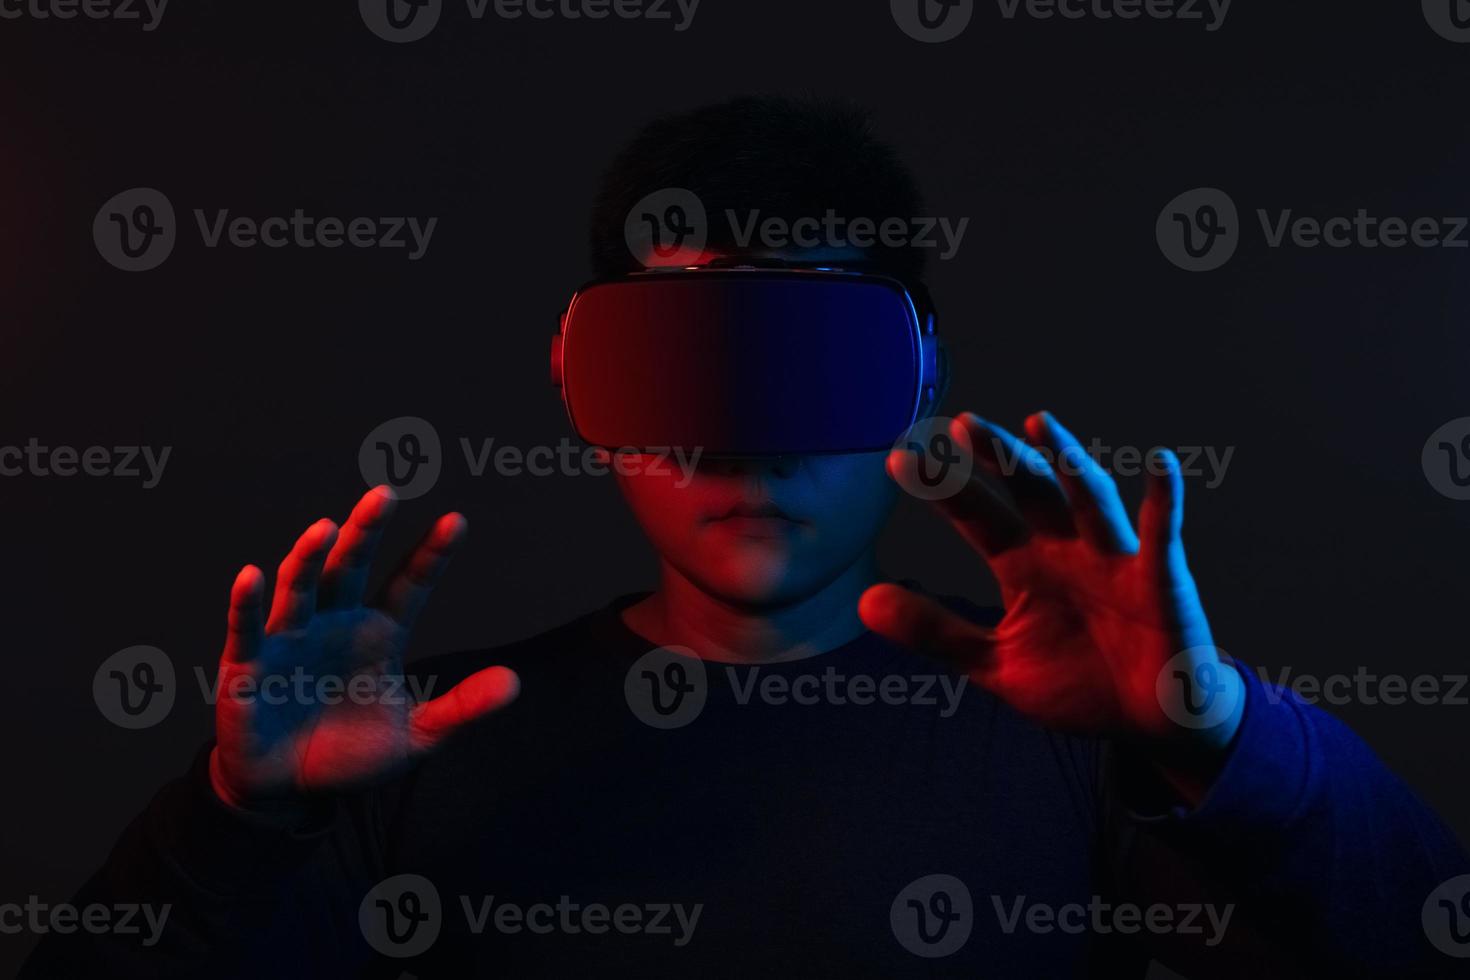 jonge man met een vr-bril. metaverse technologie virtual reality concept. virtual reality-apparaat, simulatie, 3d, ar, vr, innovatie en technologie van de toekomst op sociale media. foto